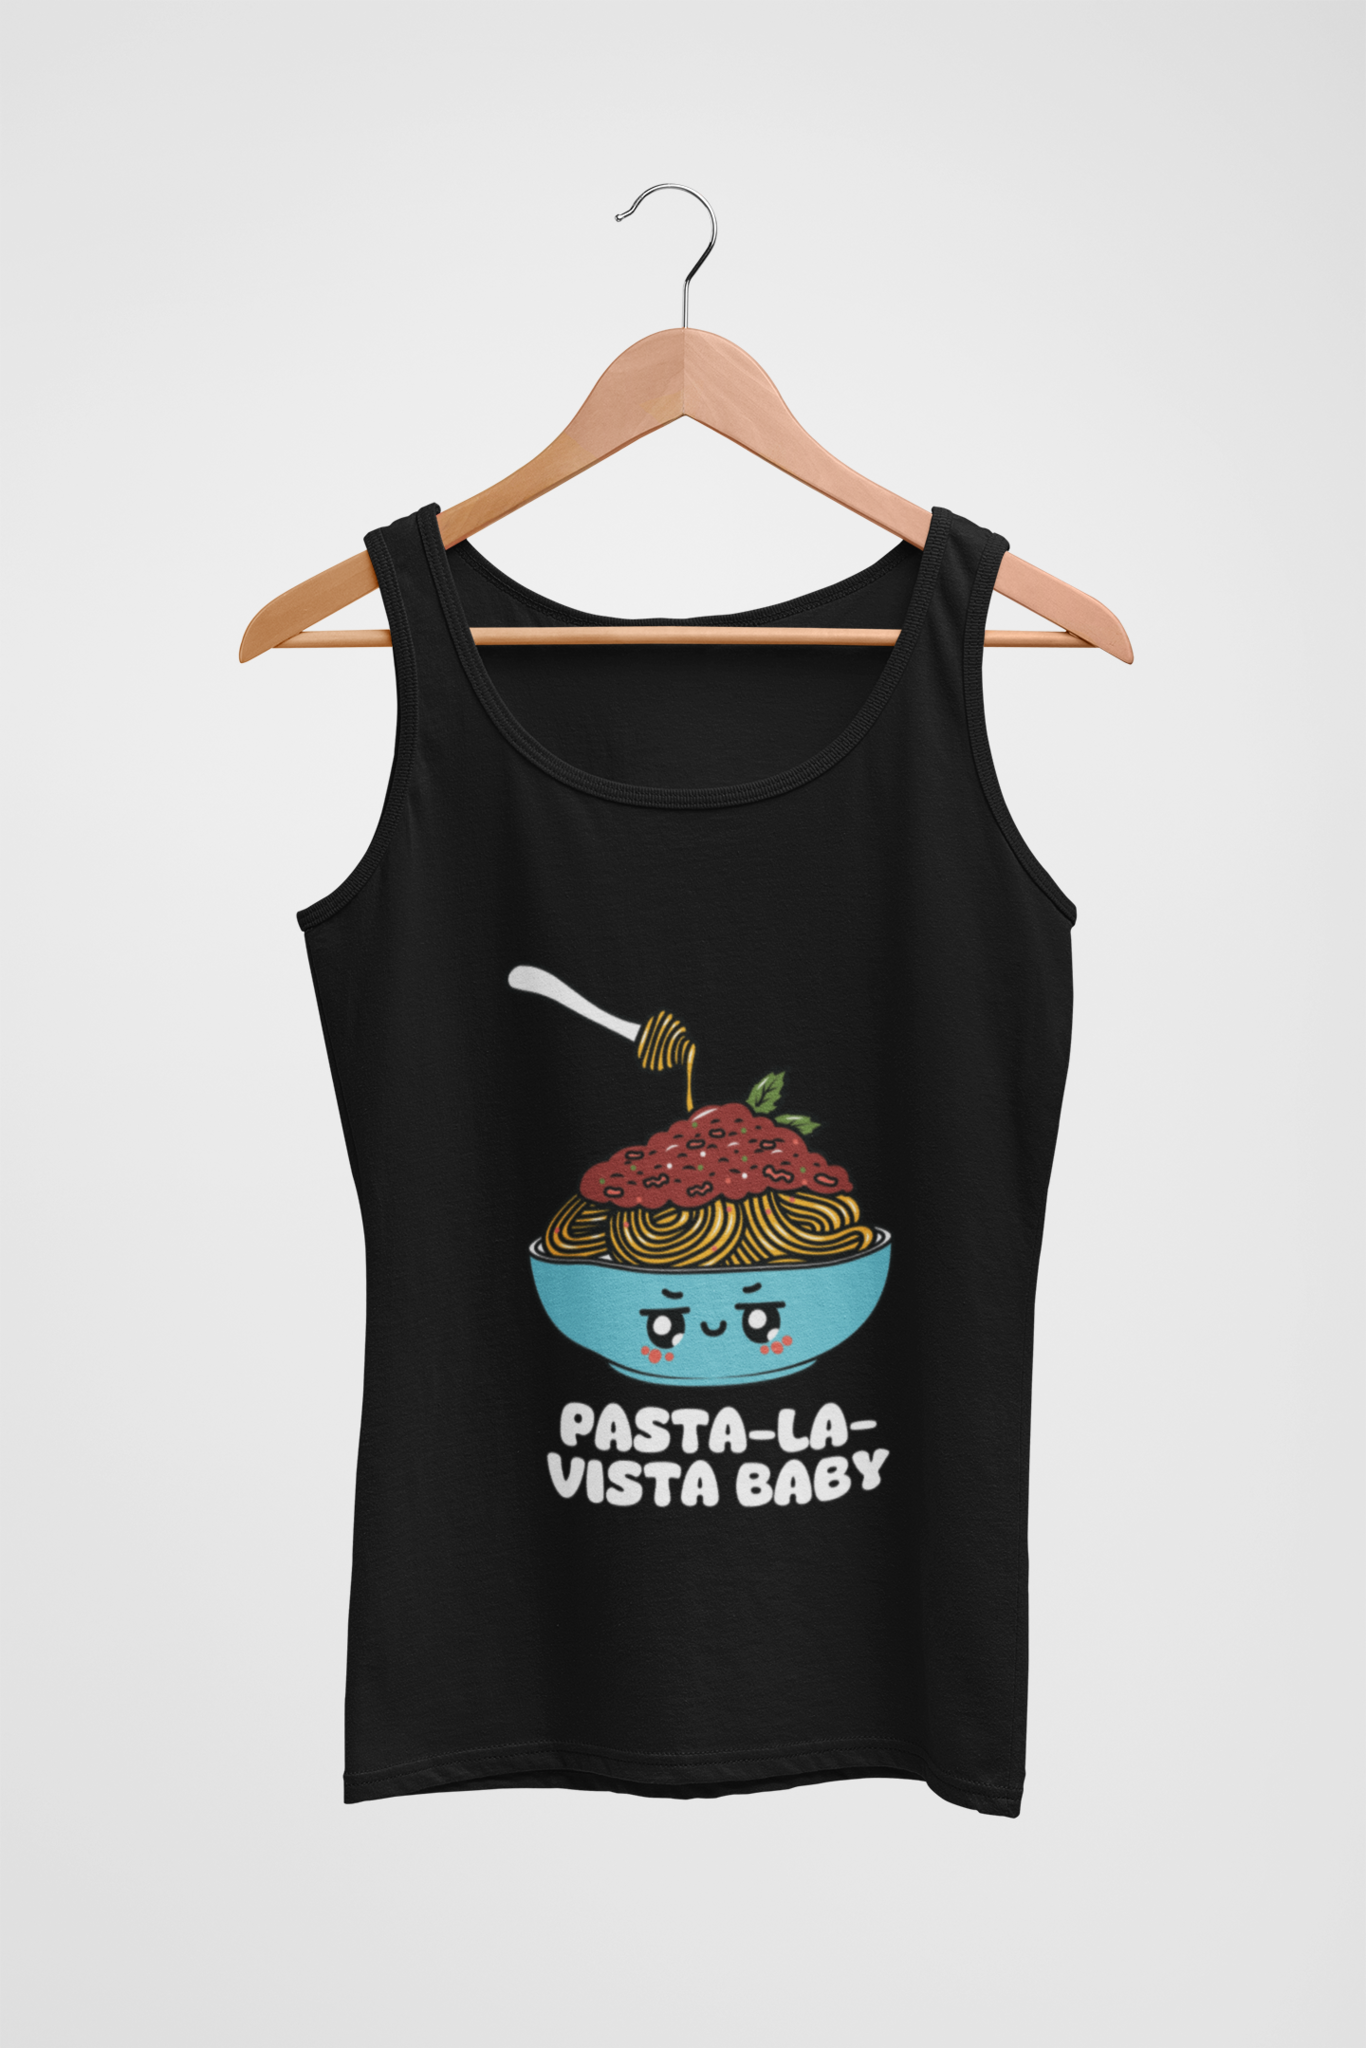 Women's Tank Top: Pasta-La-Vista